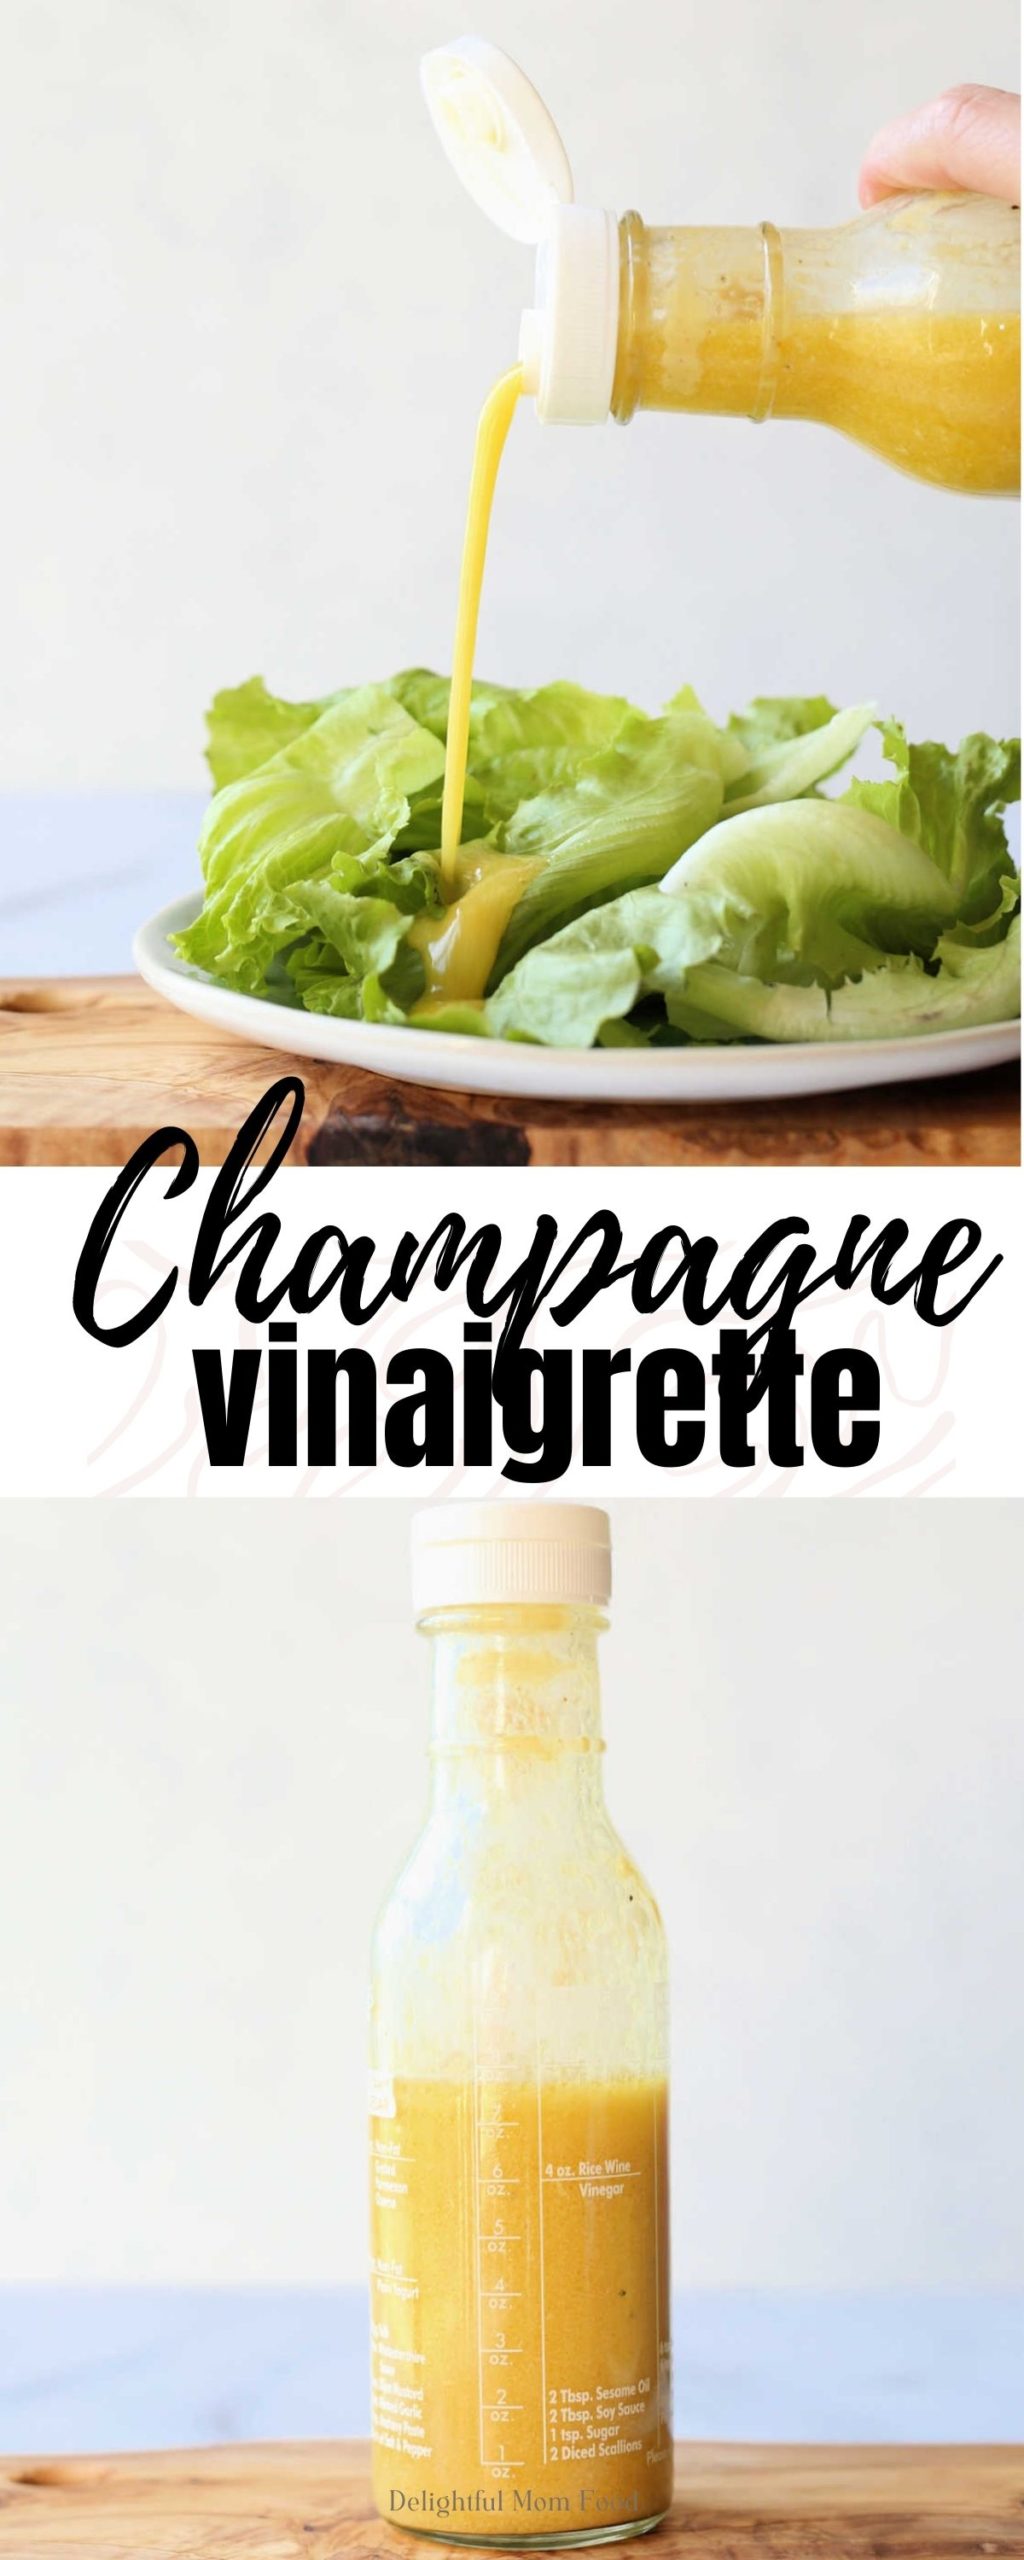 champagne vinaigrette salad dressing